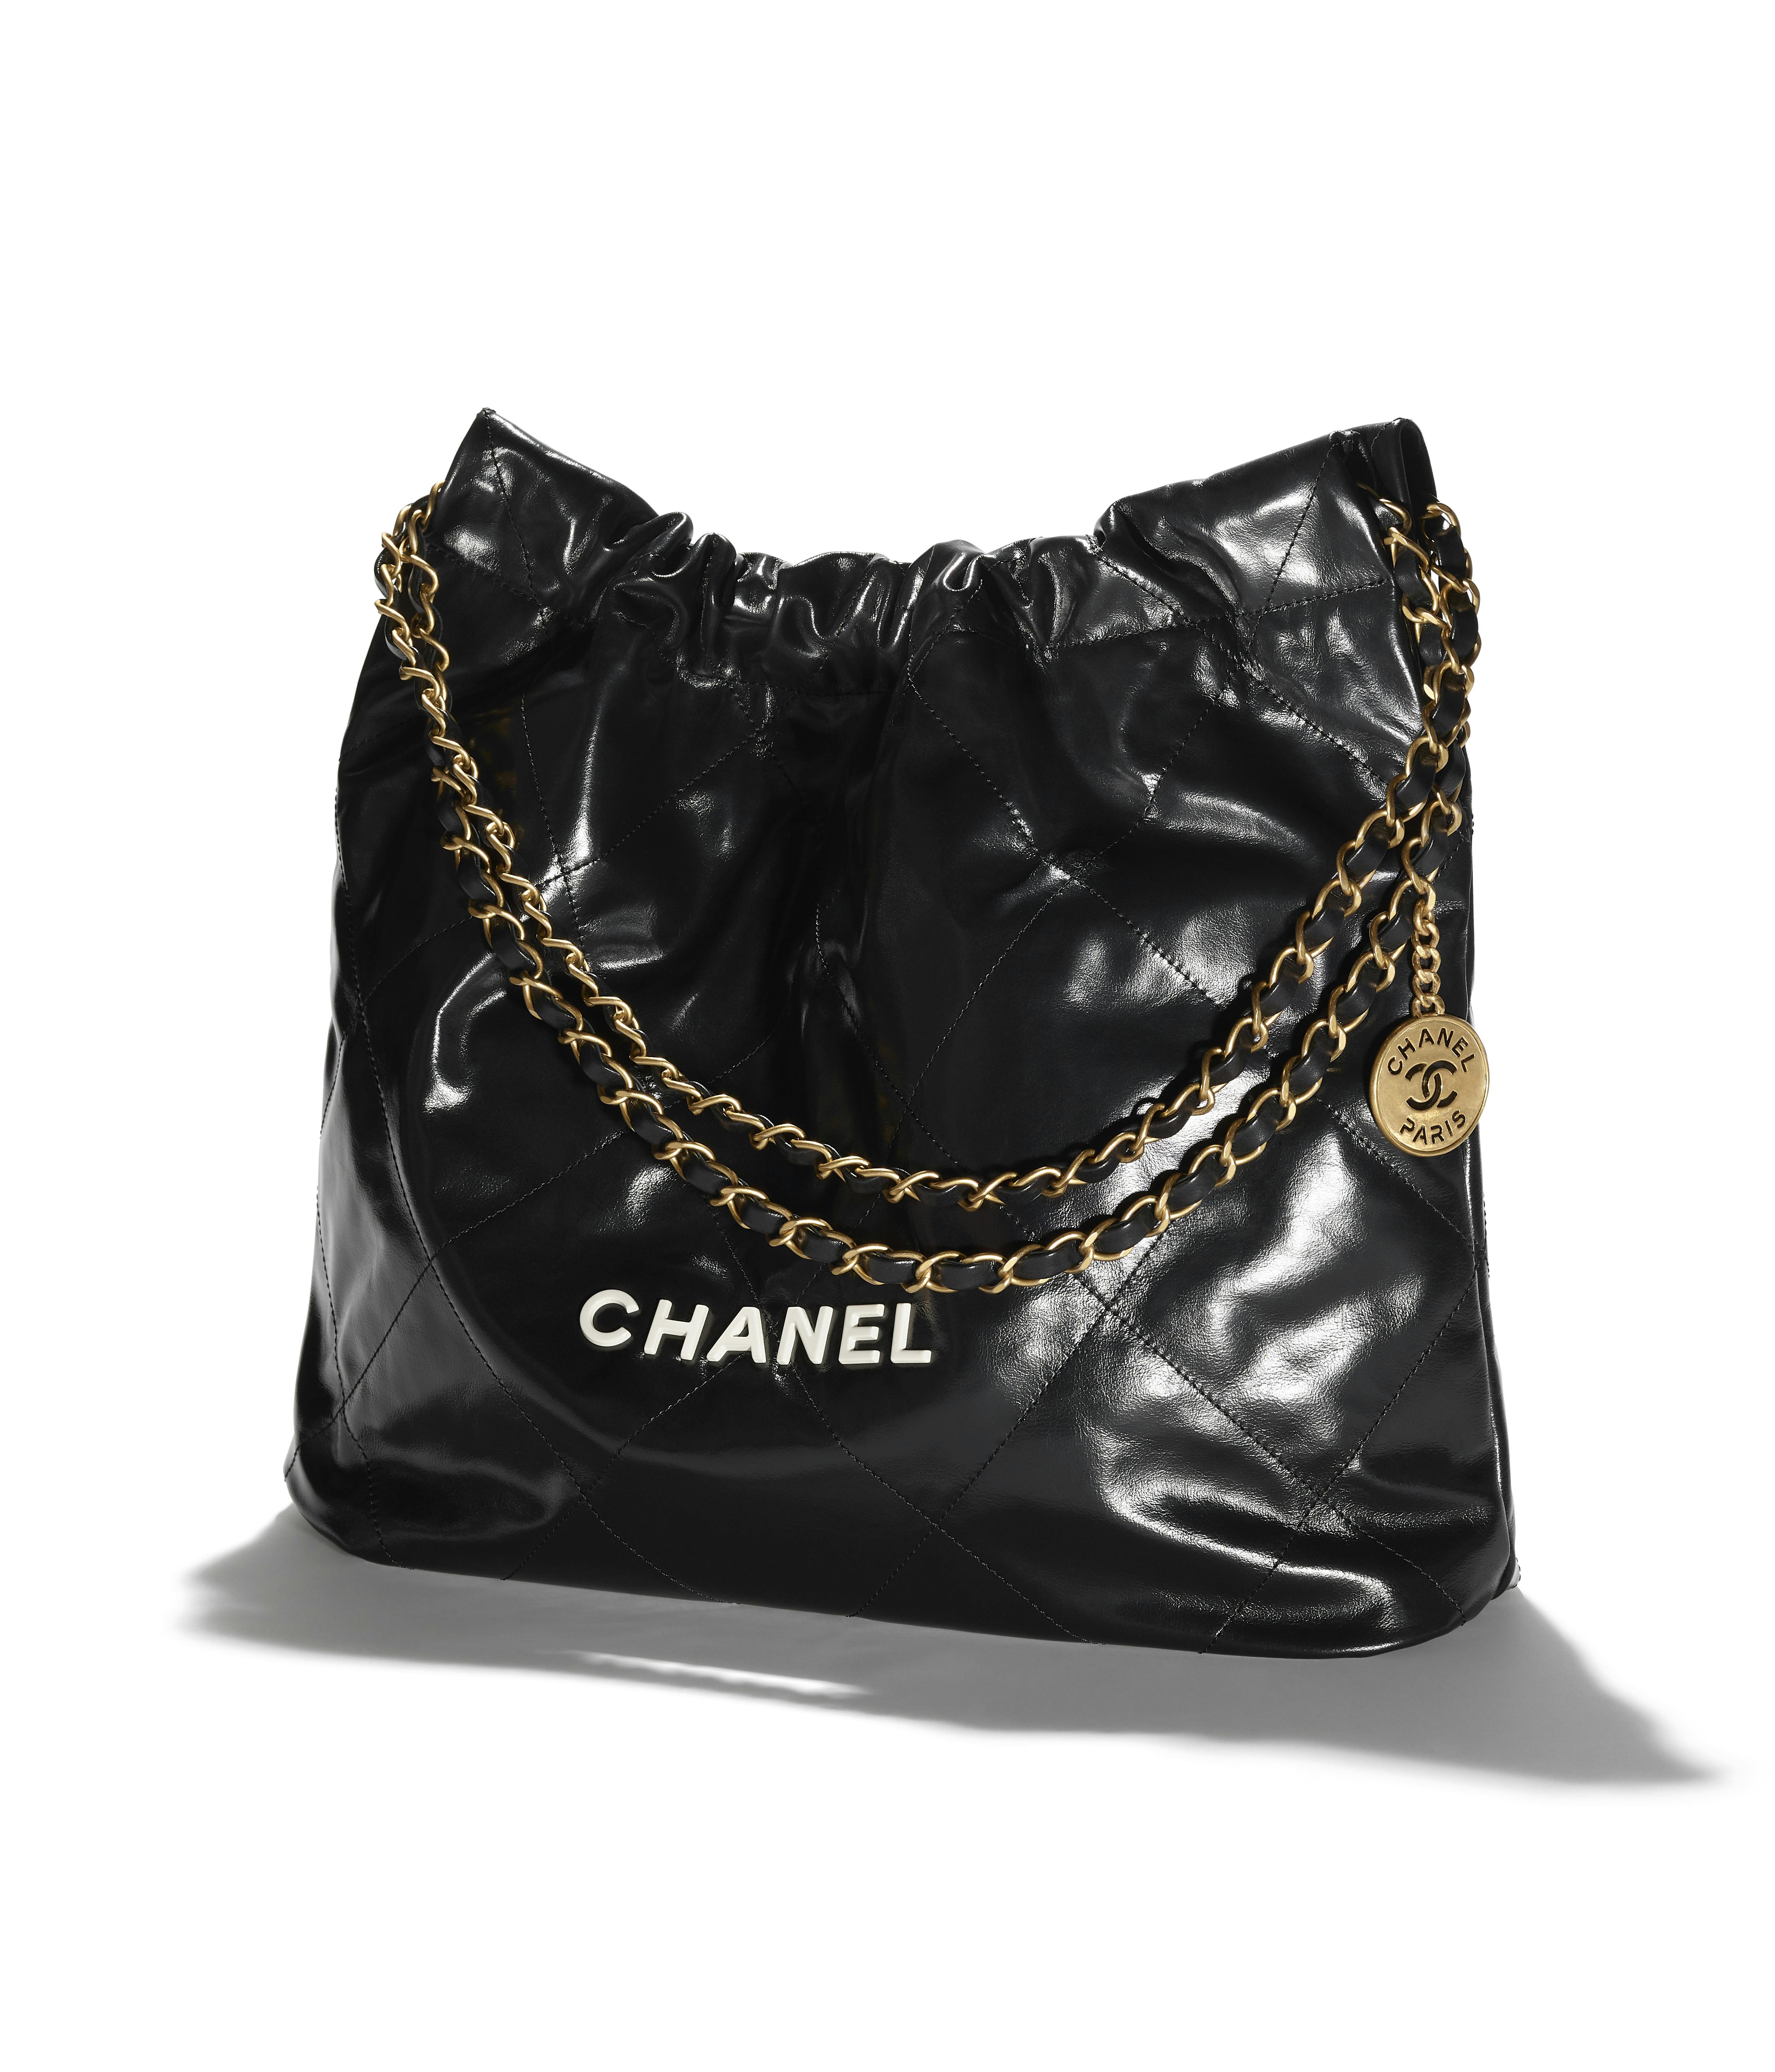 CHANEL 22 - Handbags